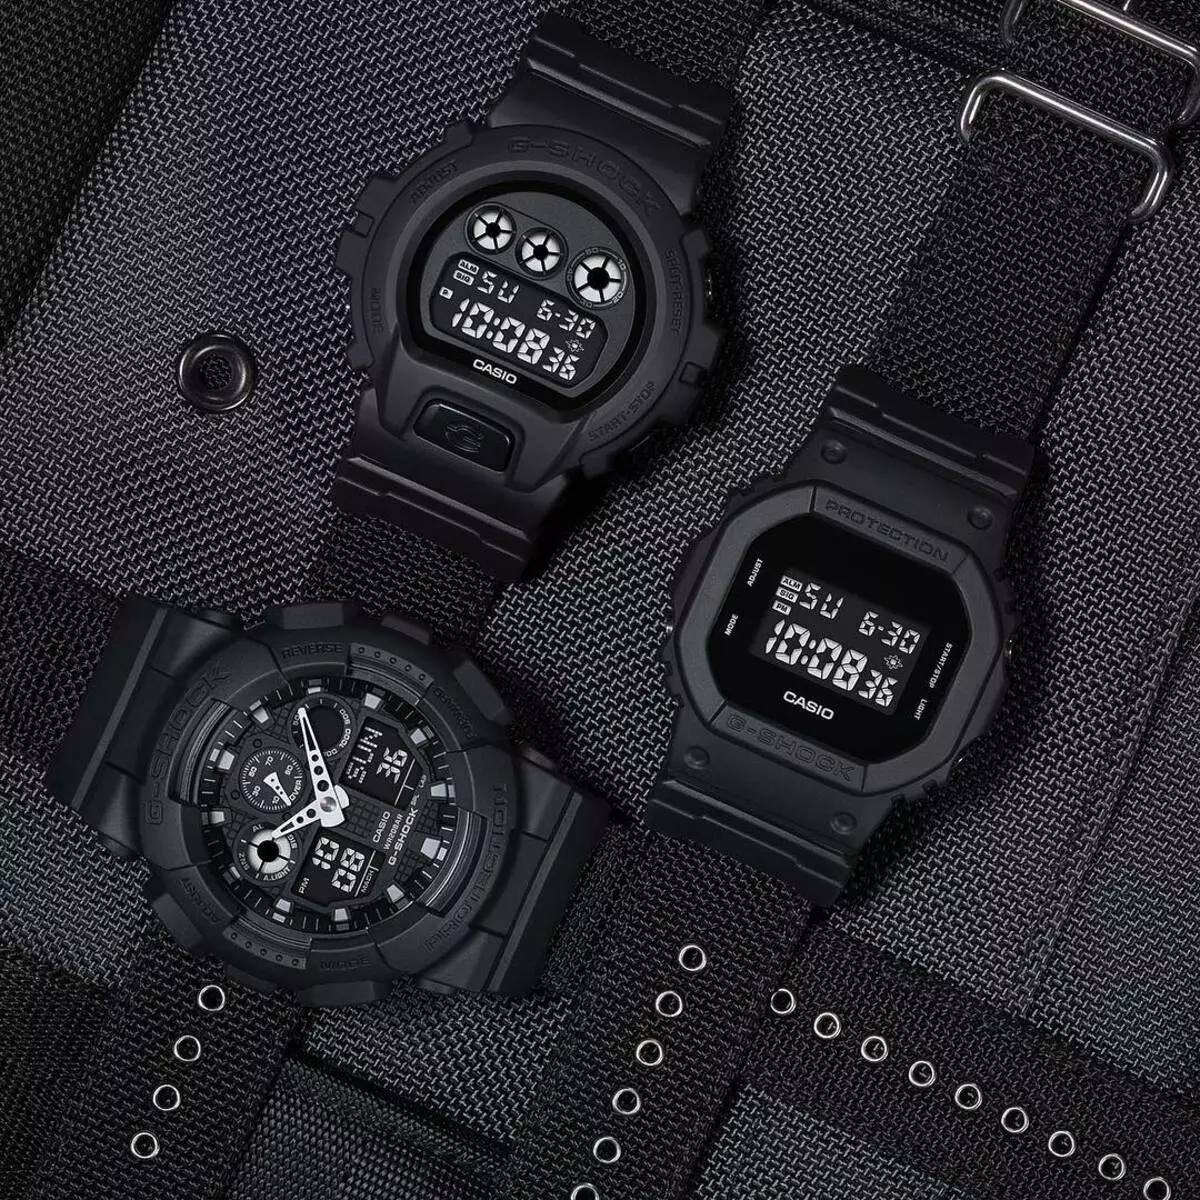 Casio Watches (60 پارچە رەسىم): مېتال بىلەيزنى قانداقتىن قىسقارتىش, ئۇ سائەتكە قانداق ئېلىش, سائەتكە قانداق ئېلىش, ئەسلىدىن قانداق پەرقلەندۈرۈش كېرەك 3040_21